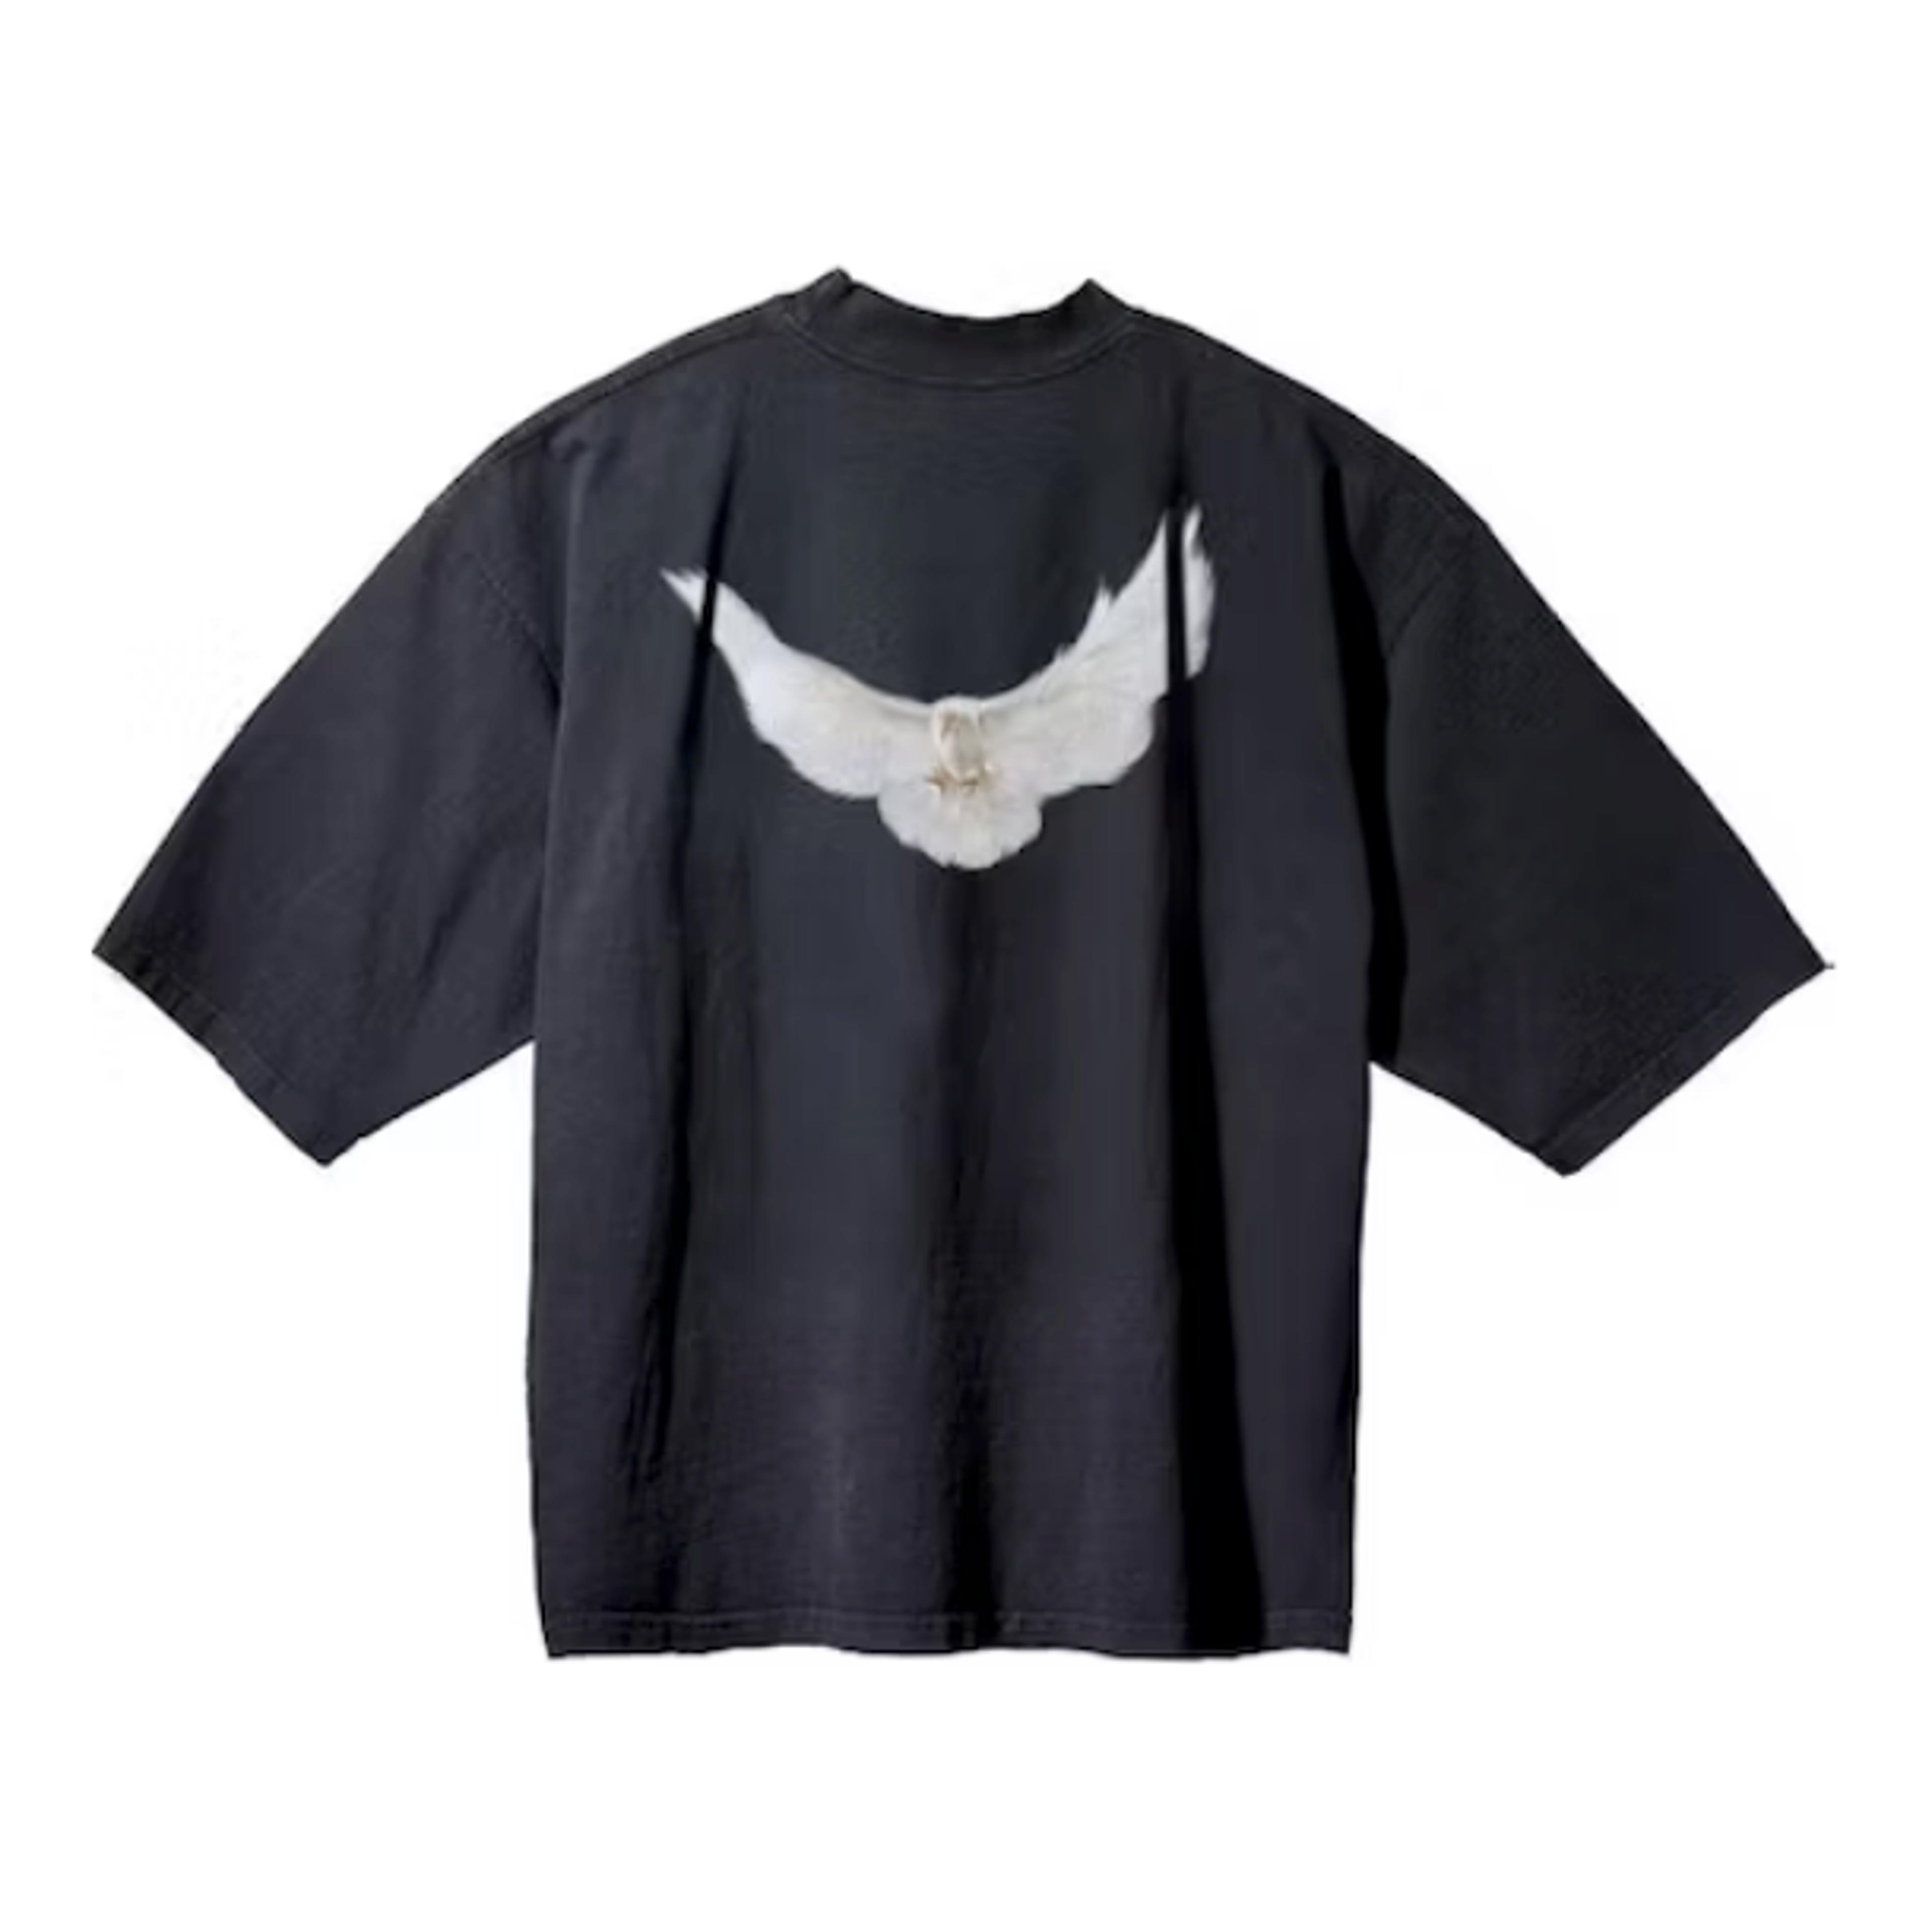 Alternate View 1 of Yeezy Gap Engineered by Balenciaga Dove 3/4 Sleeve T-shirt Black